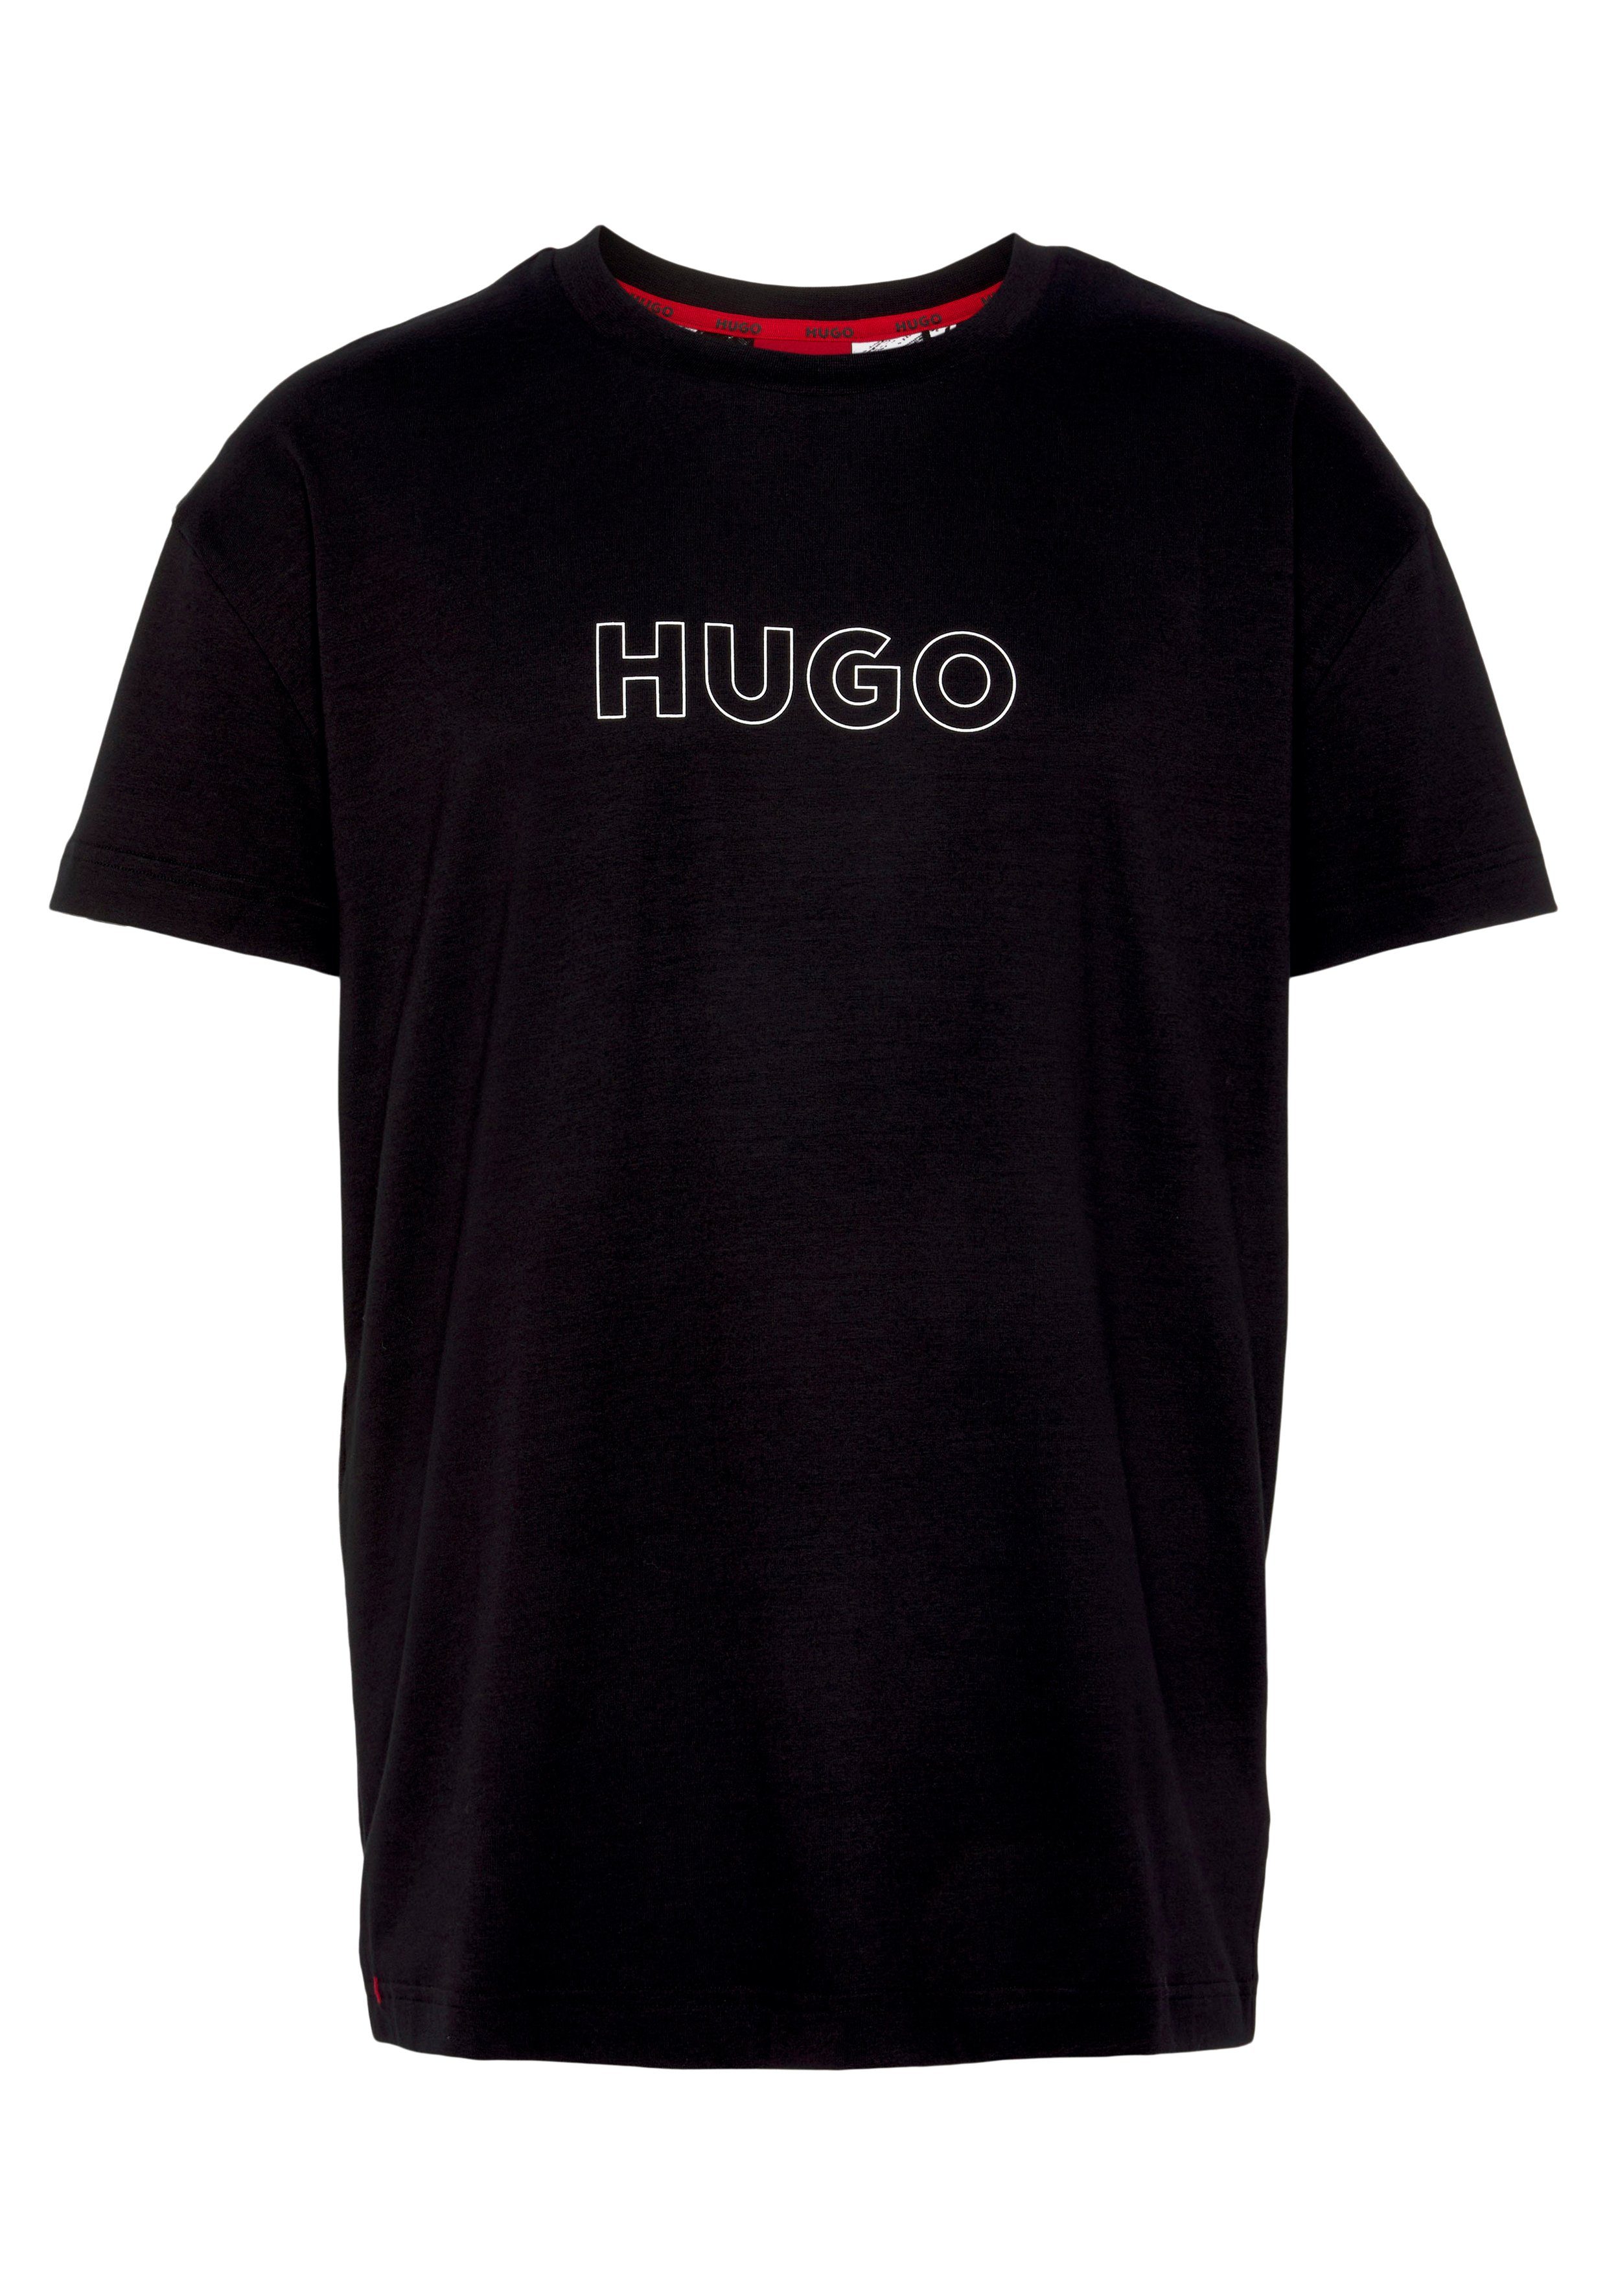 HUGO der Print Brust mit HUGO T-Shirt Logo auf Brush T-Shirt